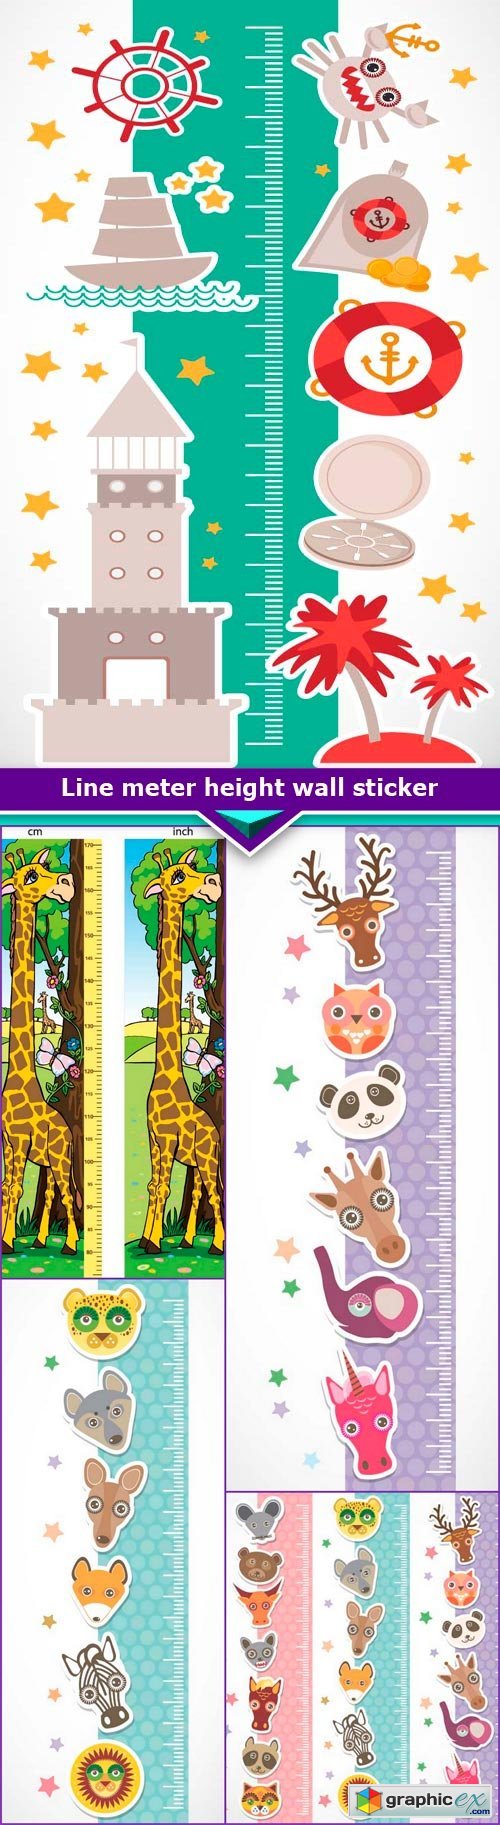 Line meter height wall sticker 5x EPS